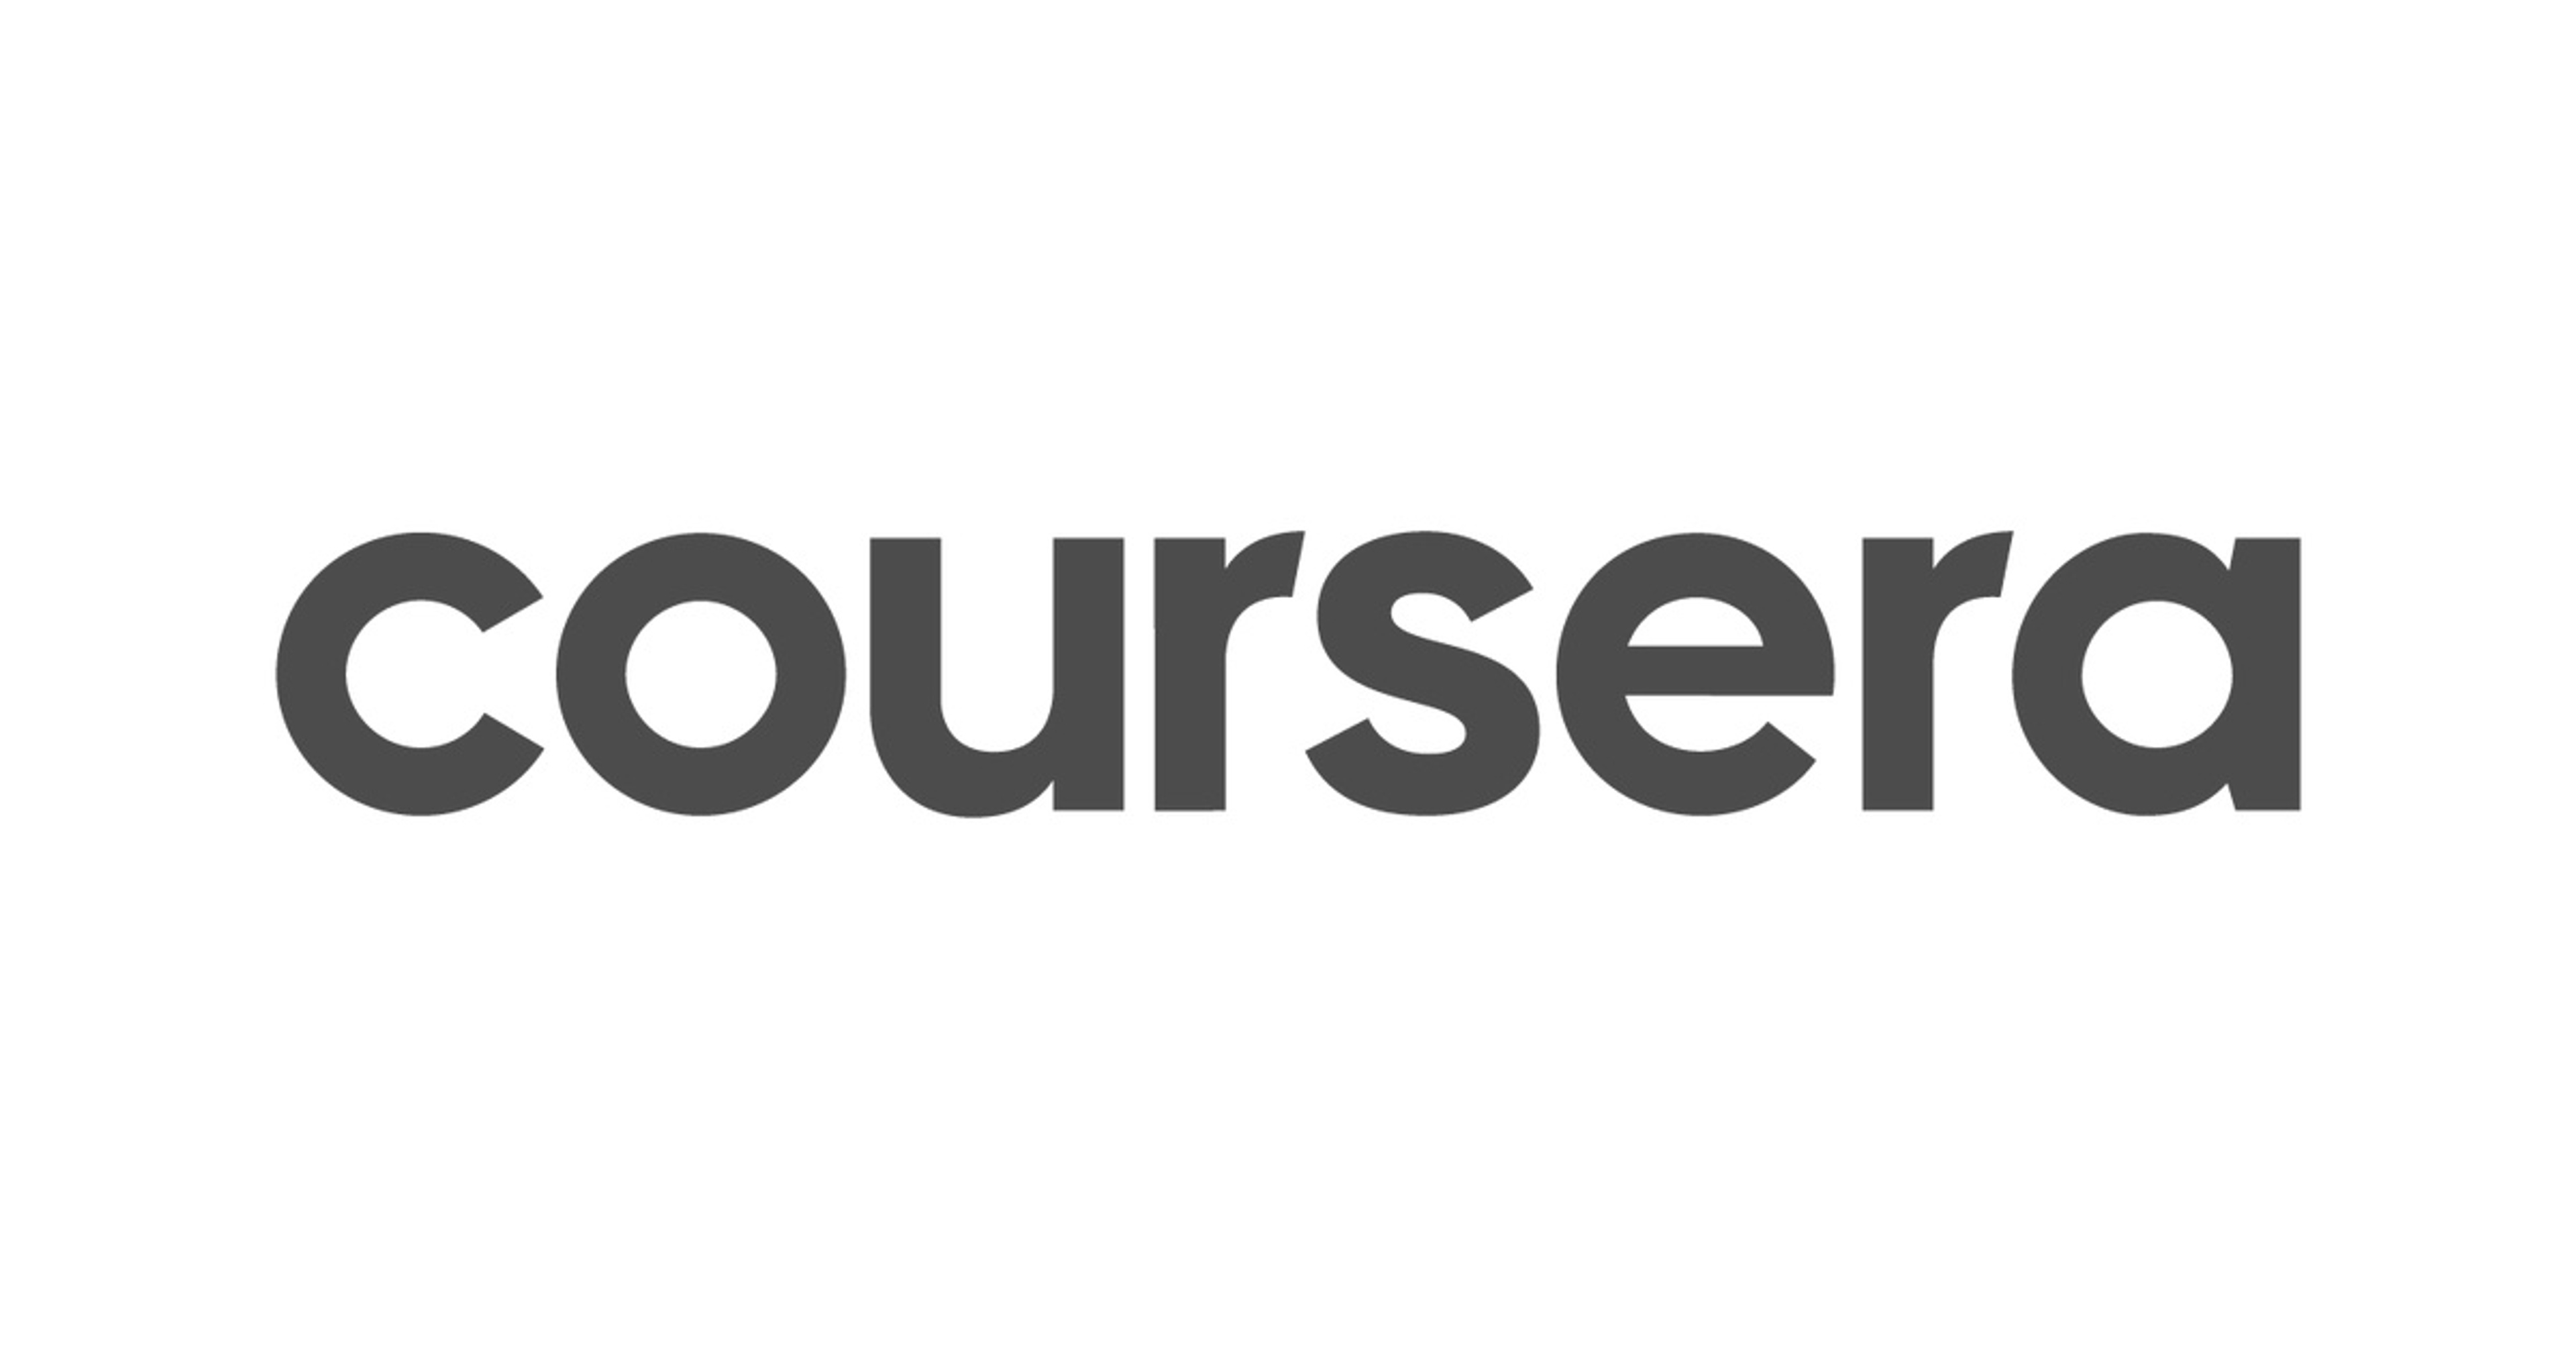 coursera-logo-full-sw